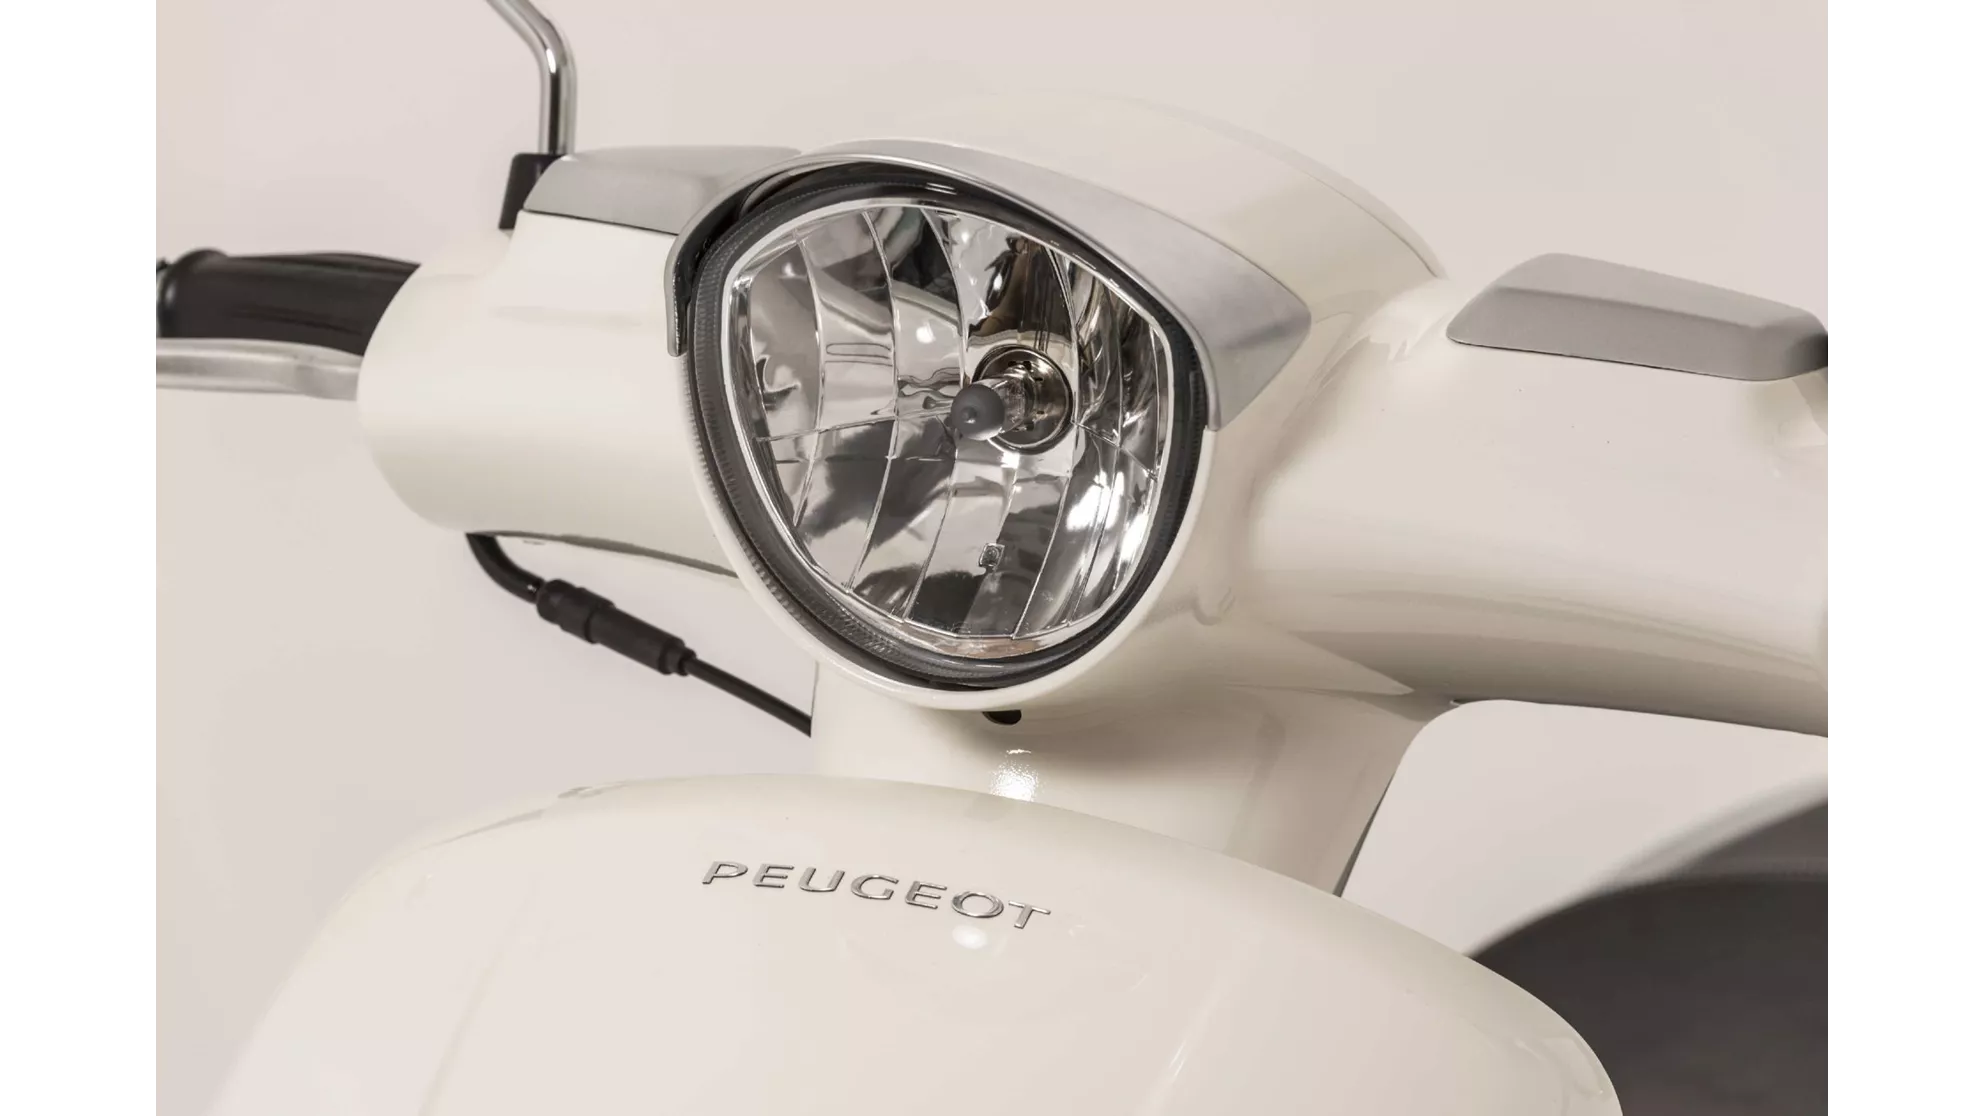 Peugeot Django 150 Heritage - Image 9